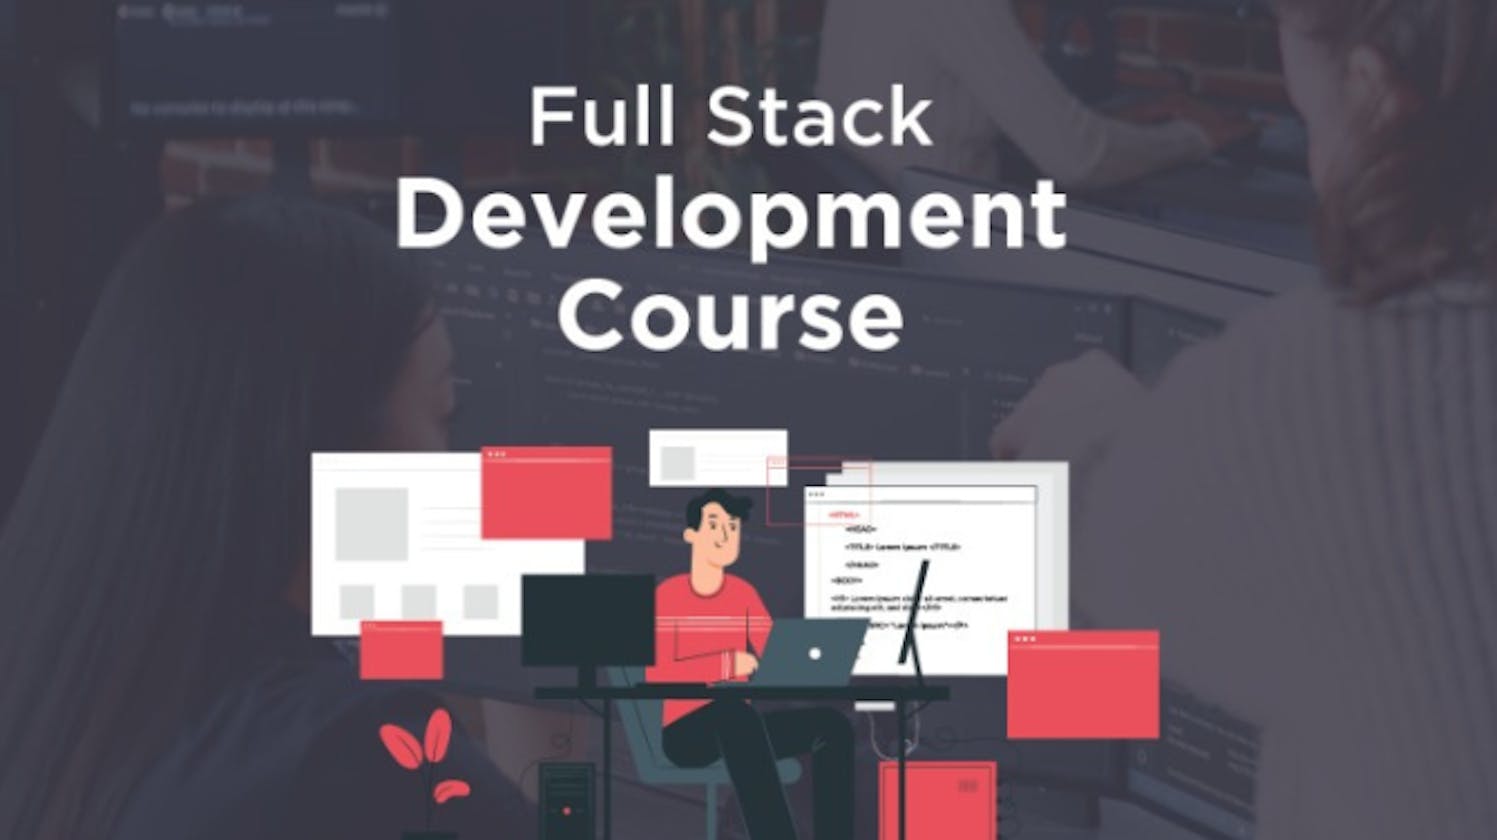 The Future of Full Stack Development